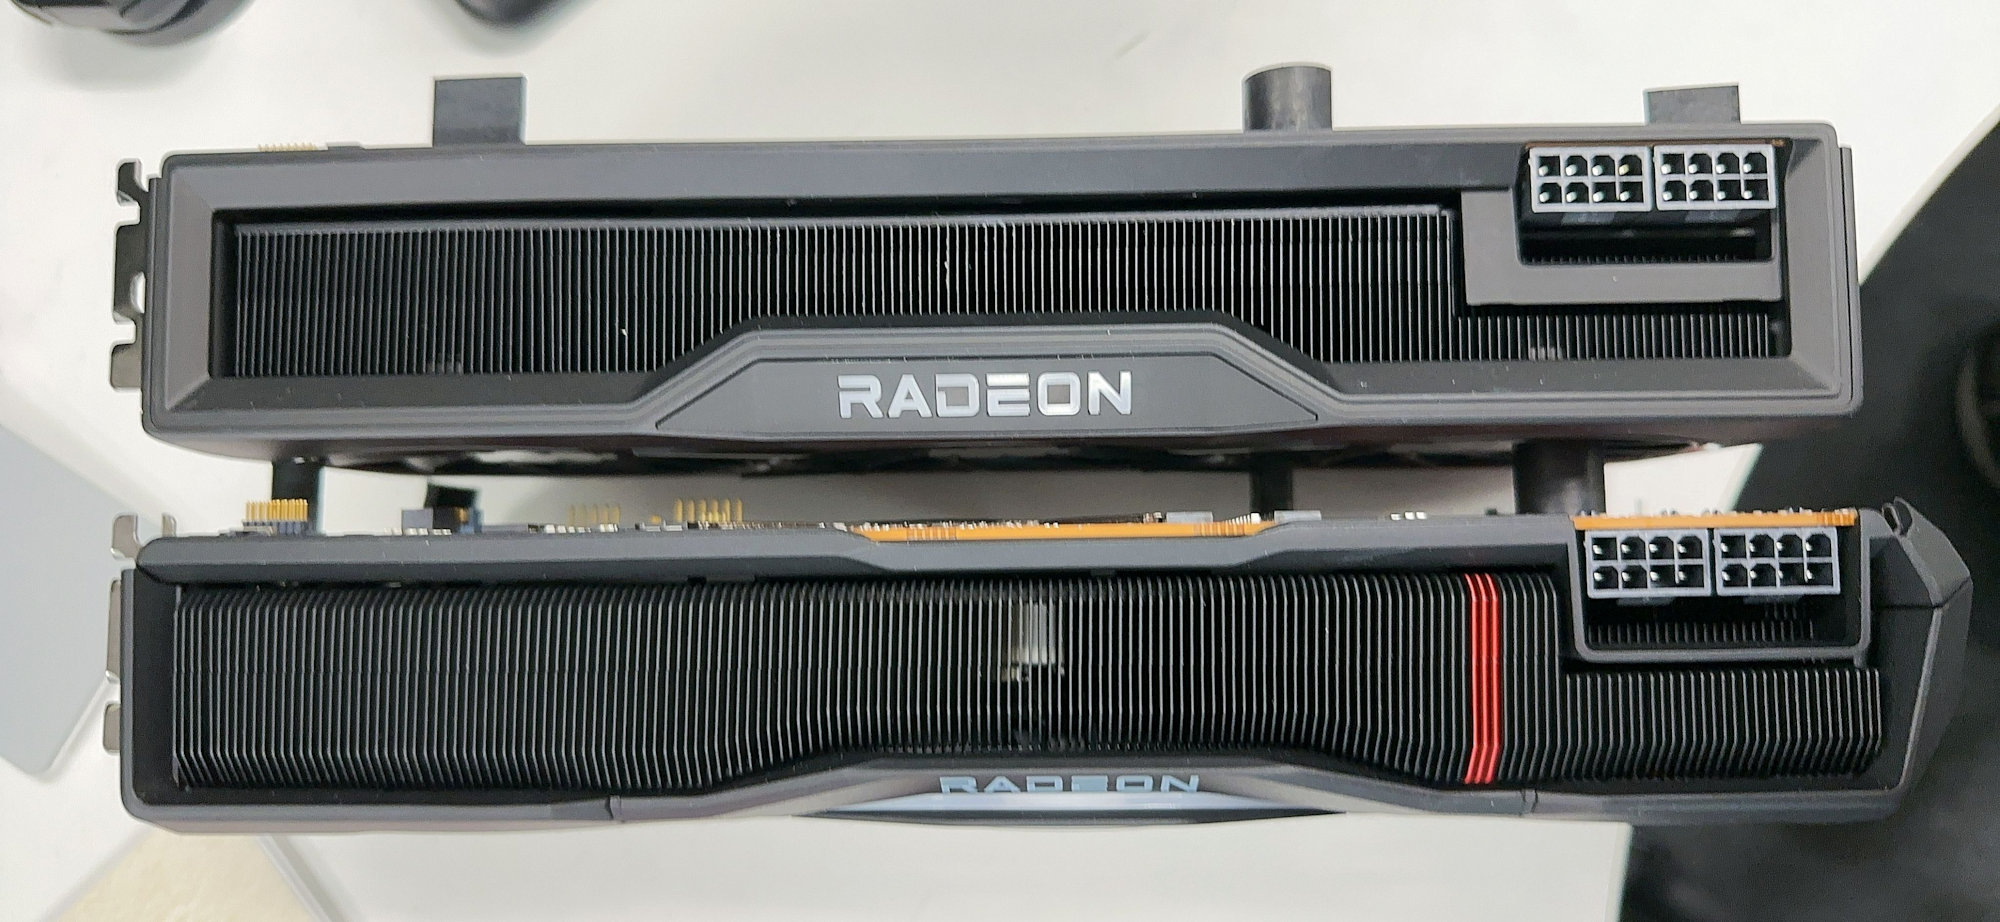 AMD Radeon RX 7900